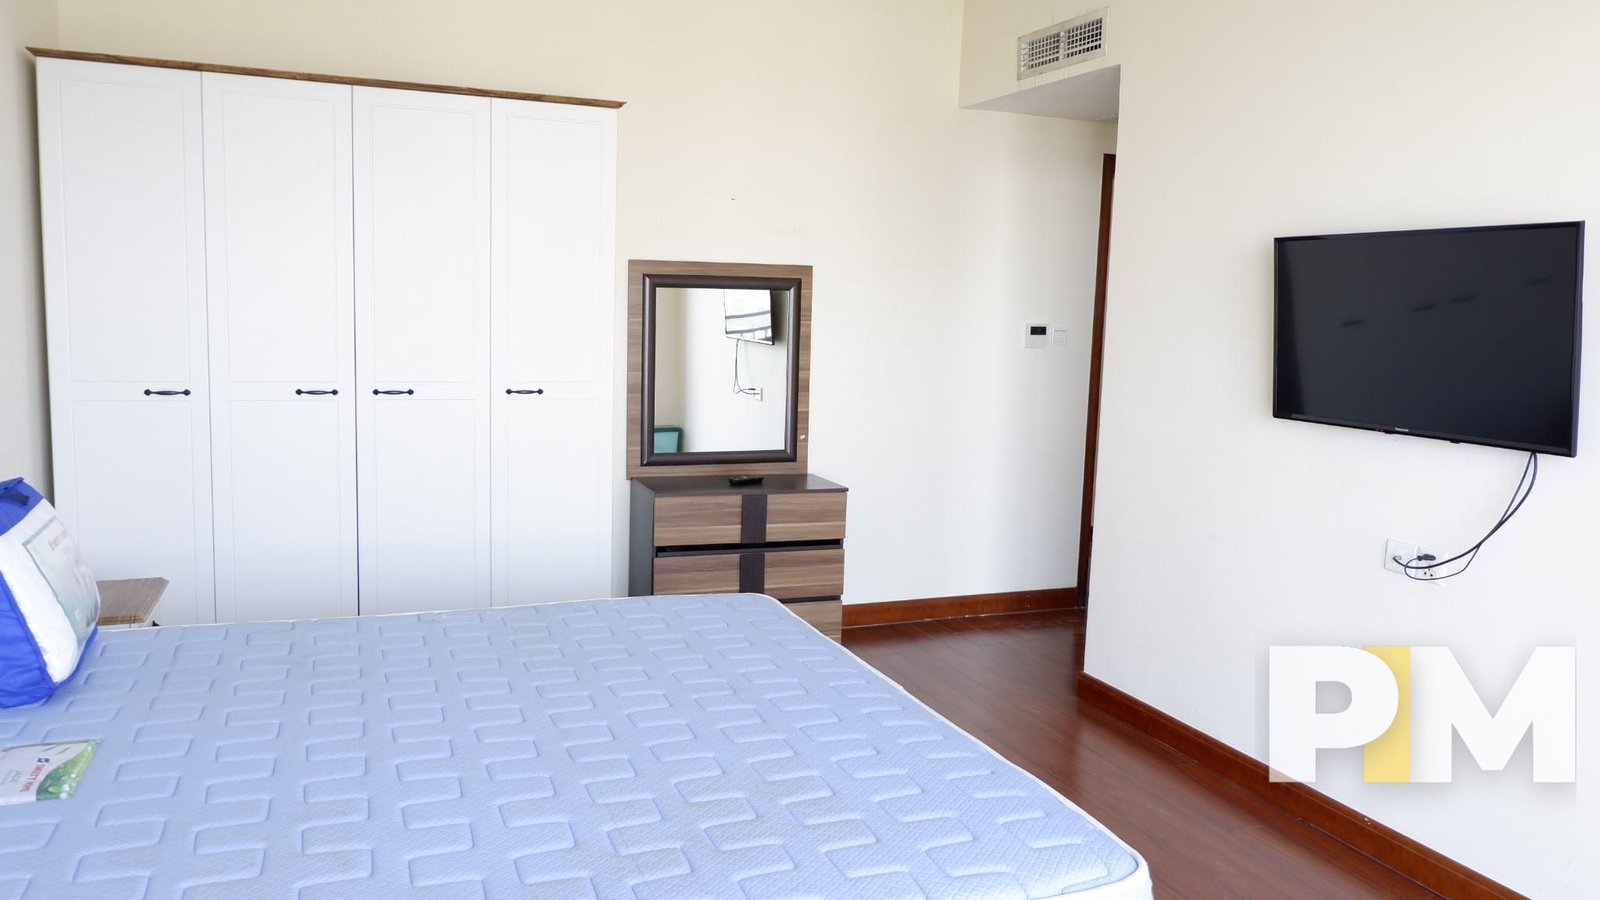 bedroom with wardrobe - Yangon Property